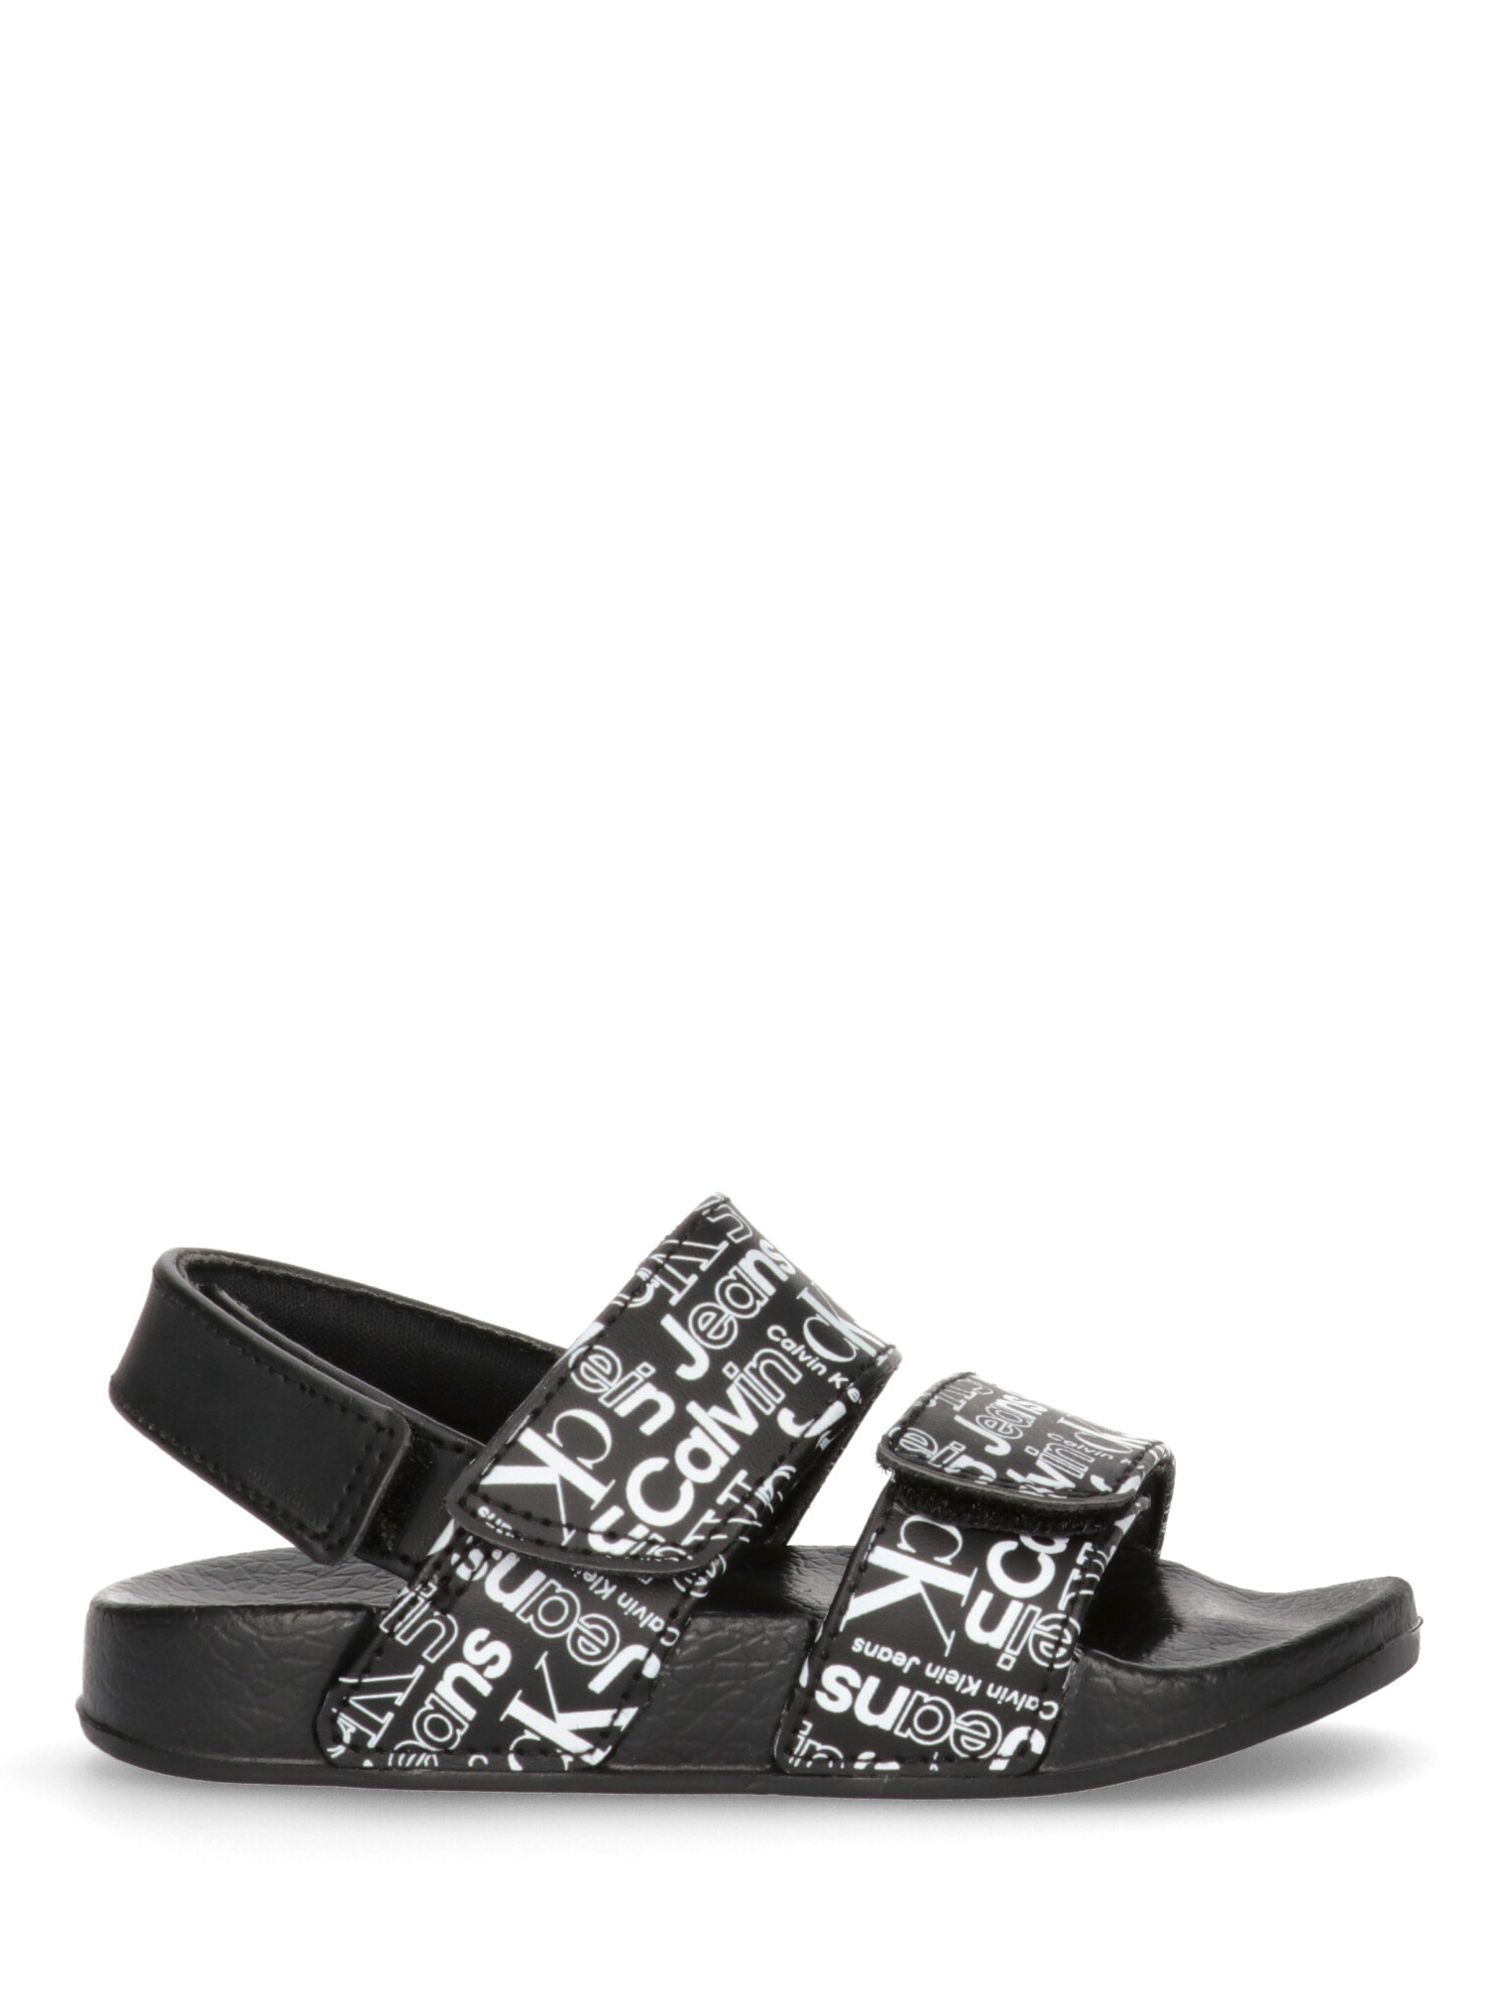 Calvin Klein Kids' Logo Riptape Strap Sandals, Black, 22